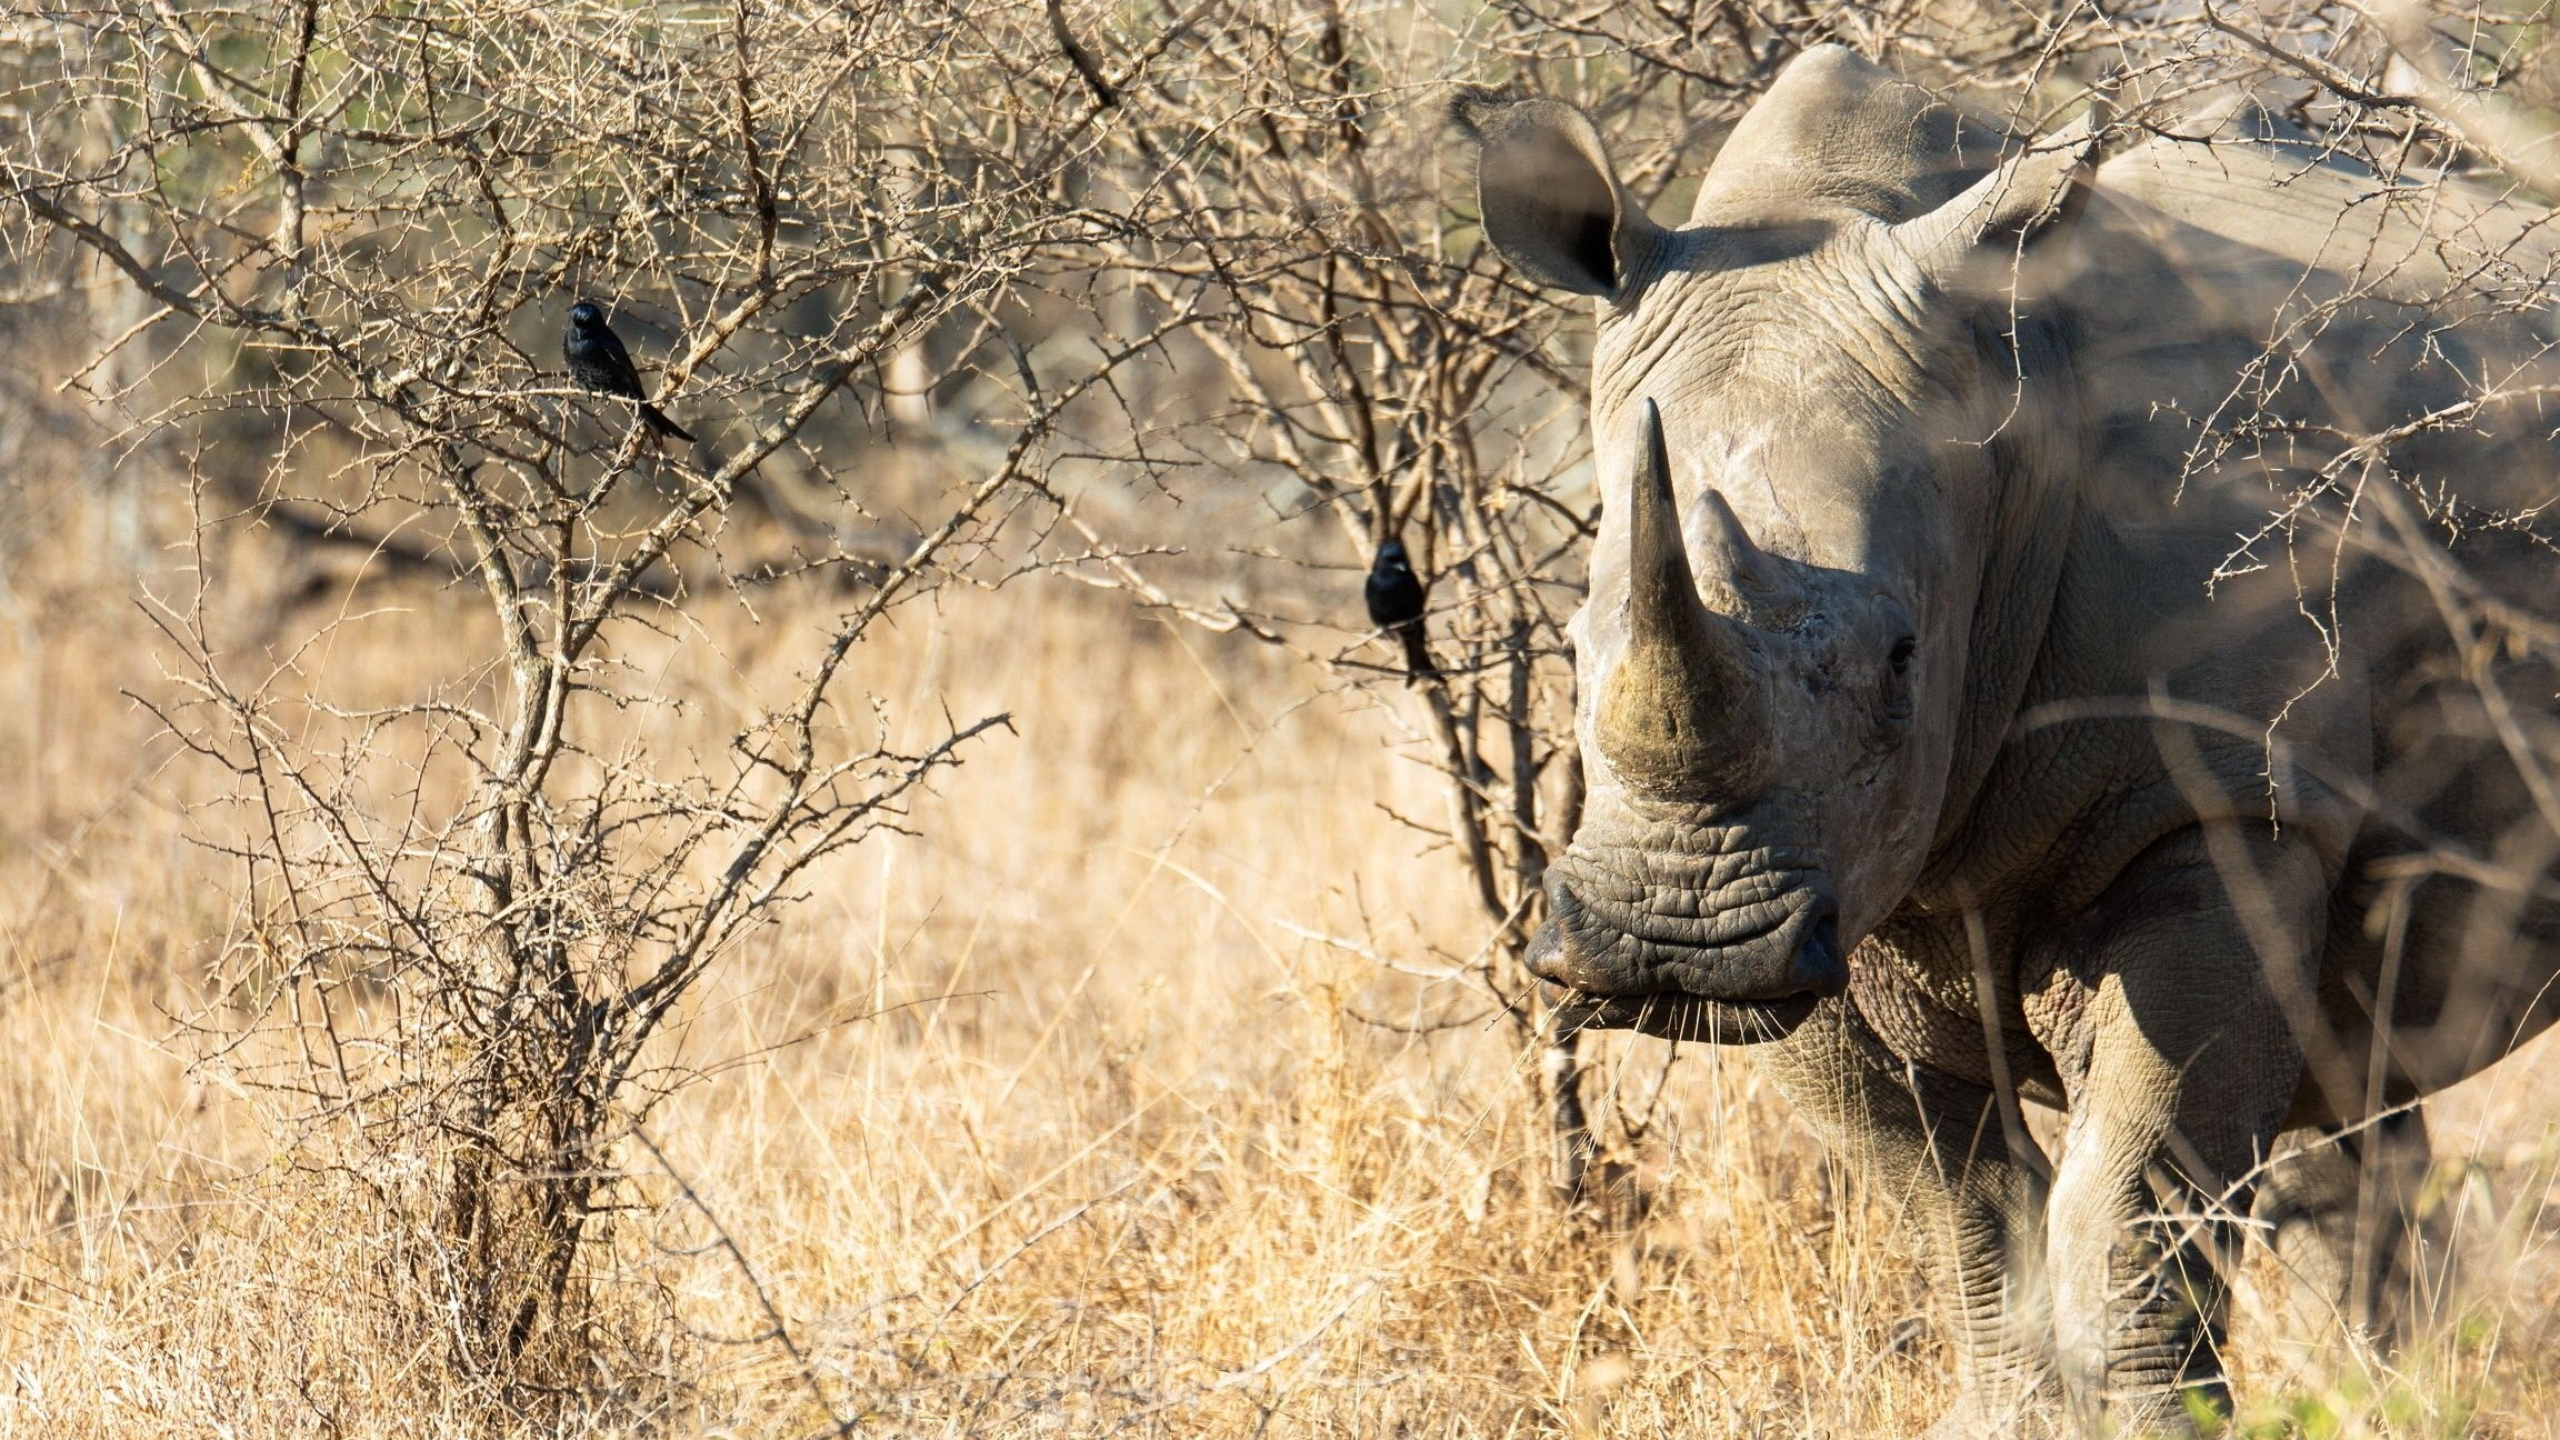 Rhino profile, Endangered species, Rare sighting, Conservation efforts, 2560x1440 HD Desktop